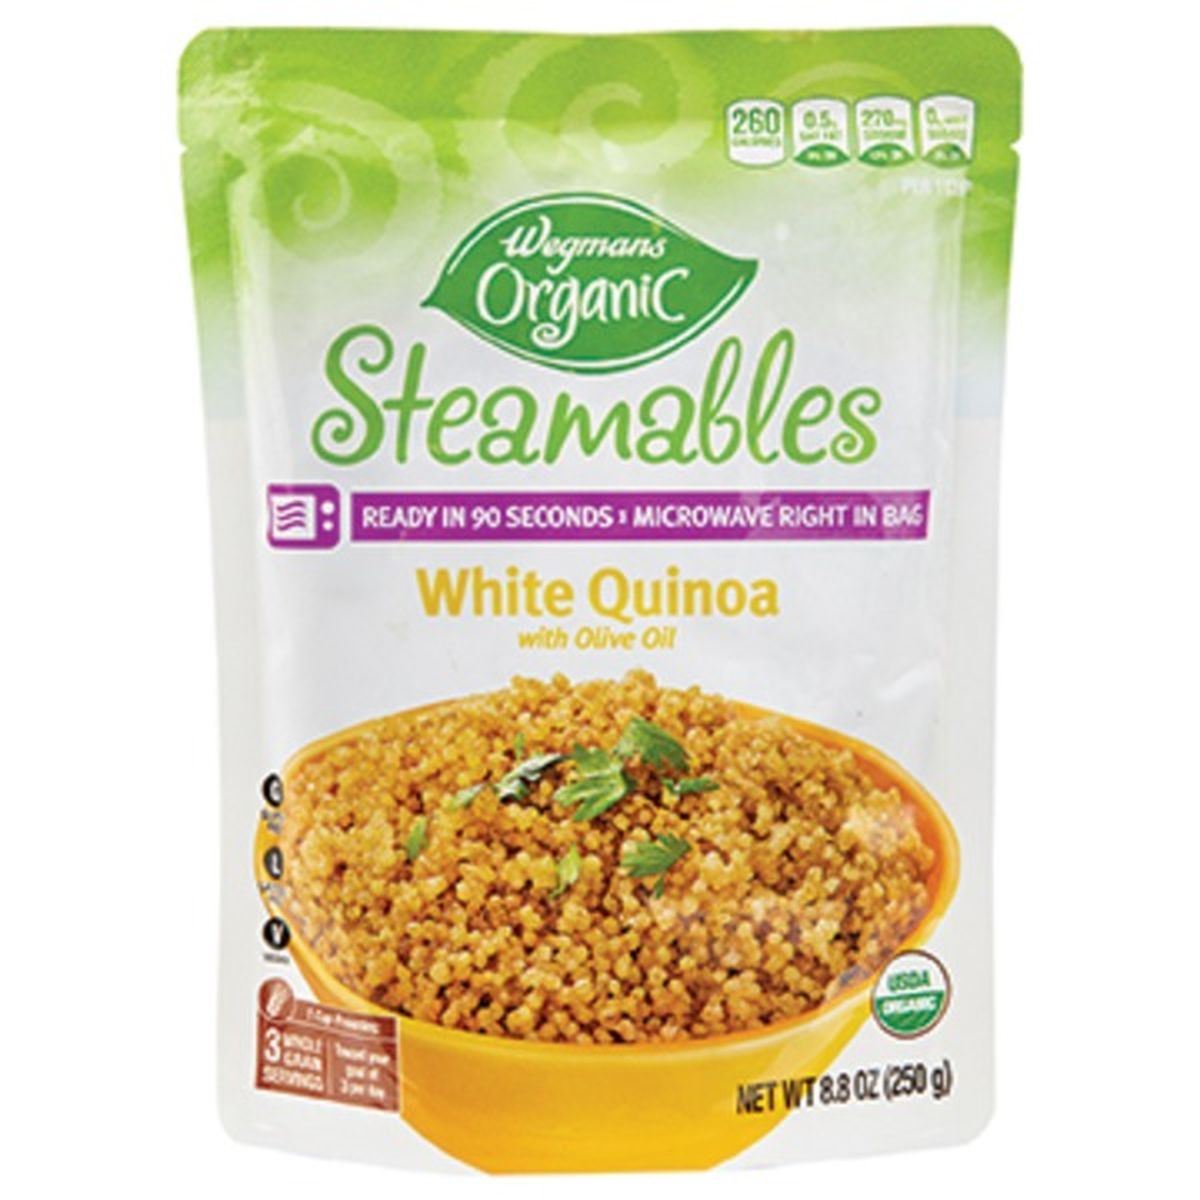 Calories in Wegmans Organic Instant White Quinoa with Olive Oil